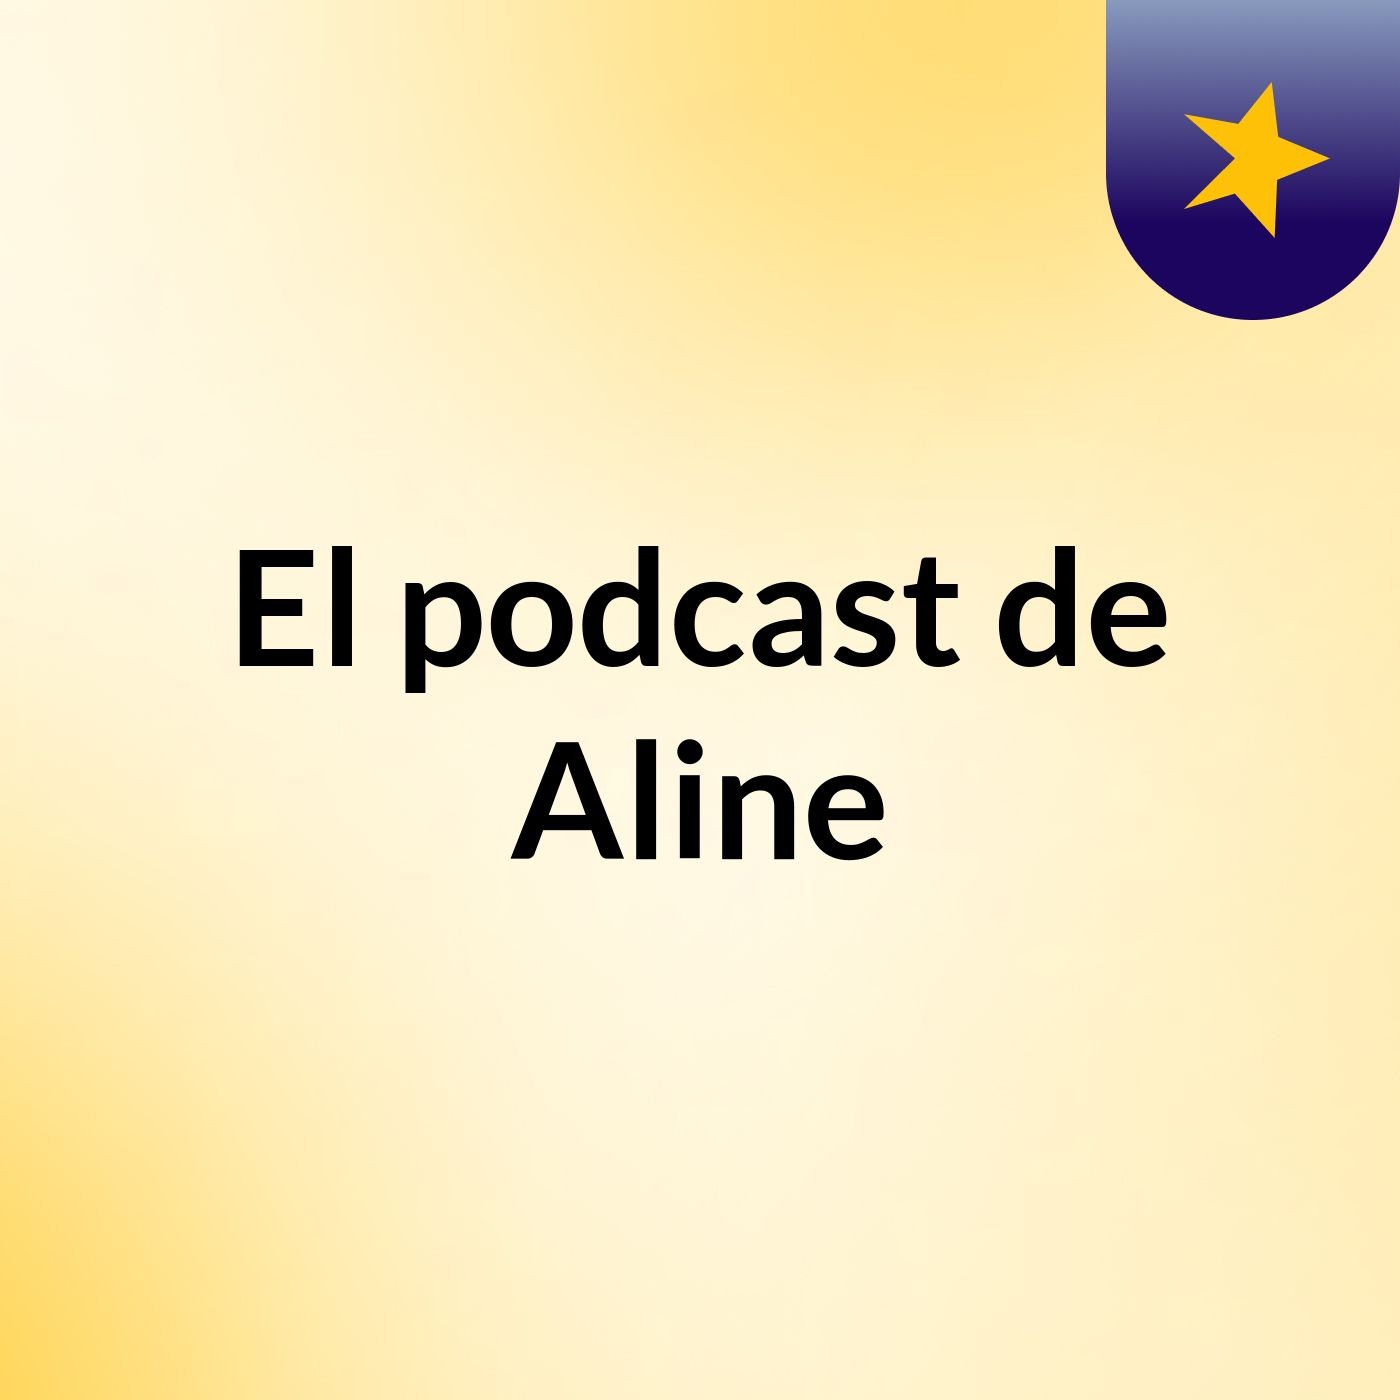 El podcast de Aline